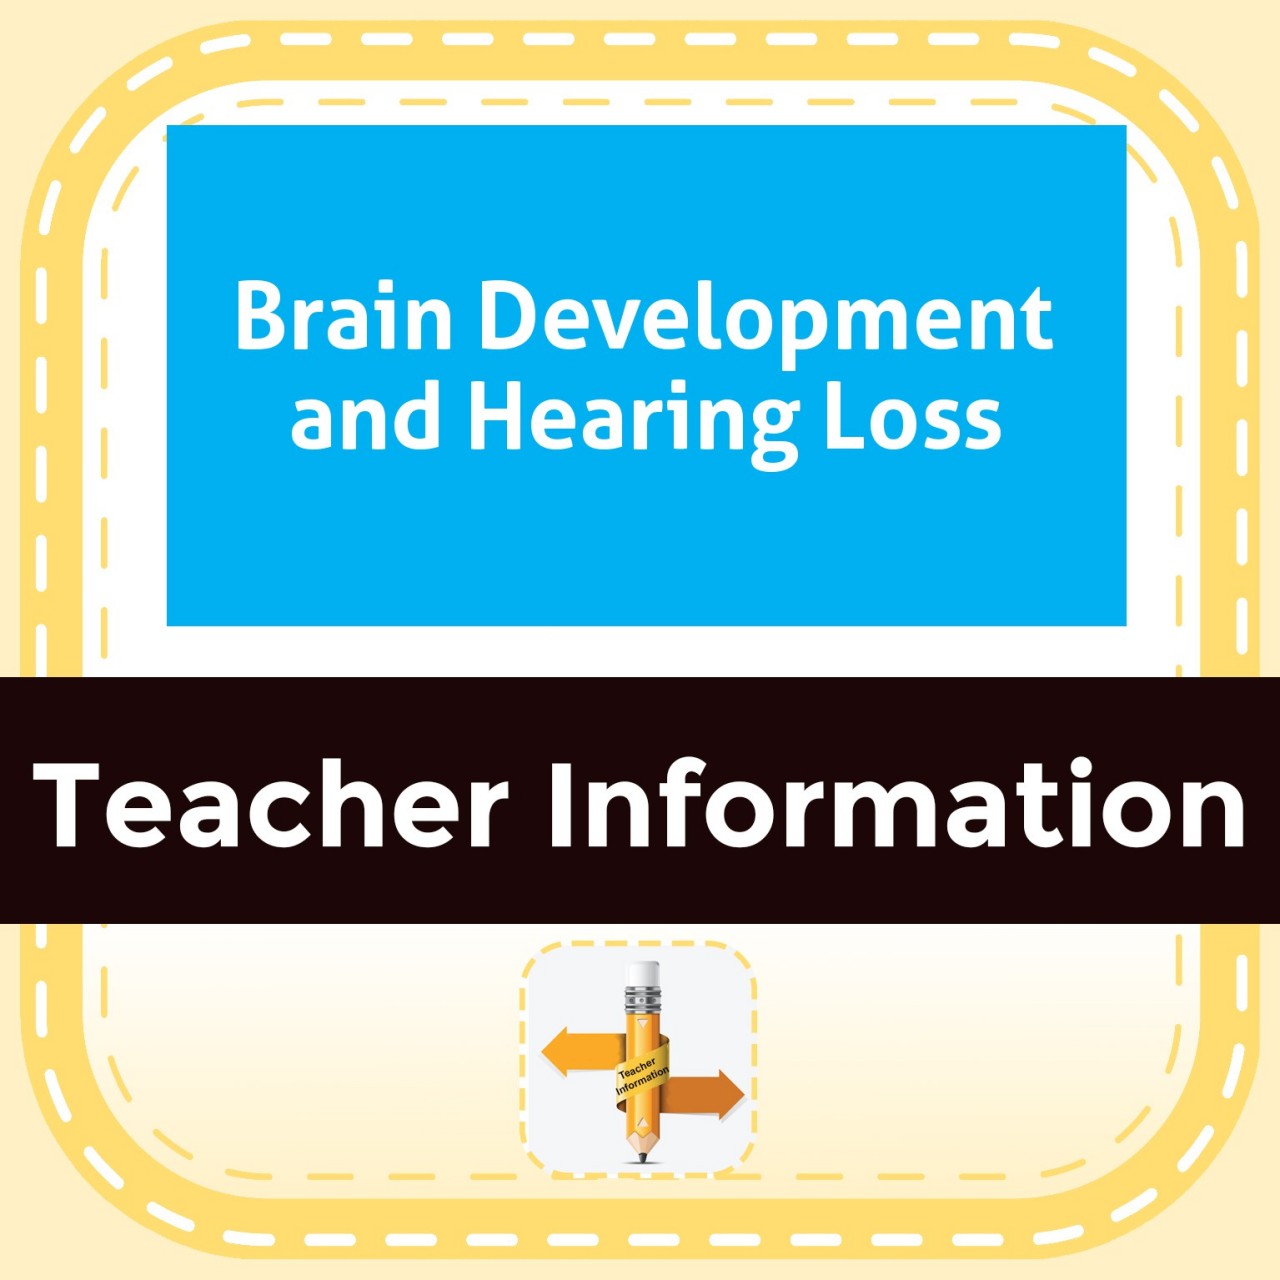 Brain Development and Hearing Loss